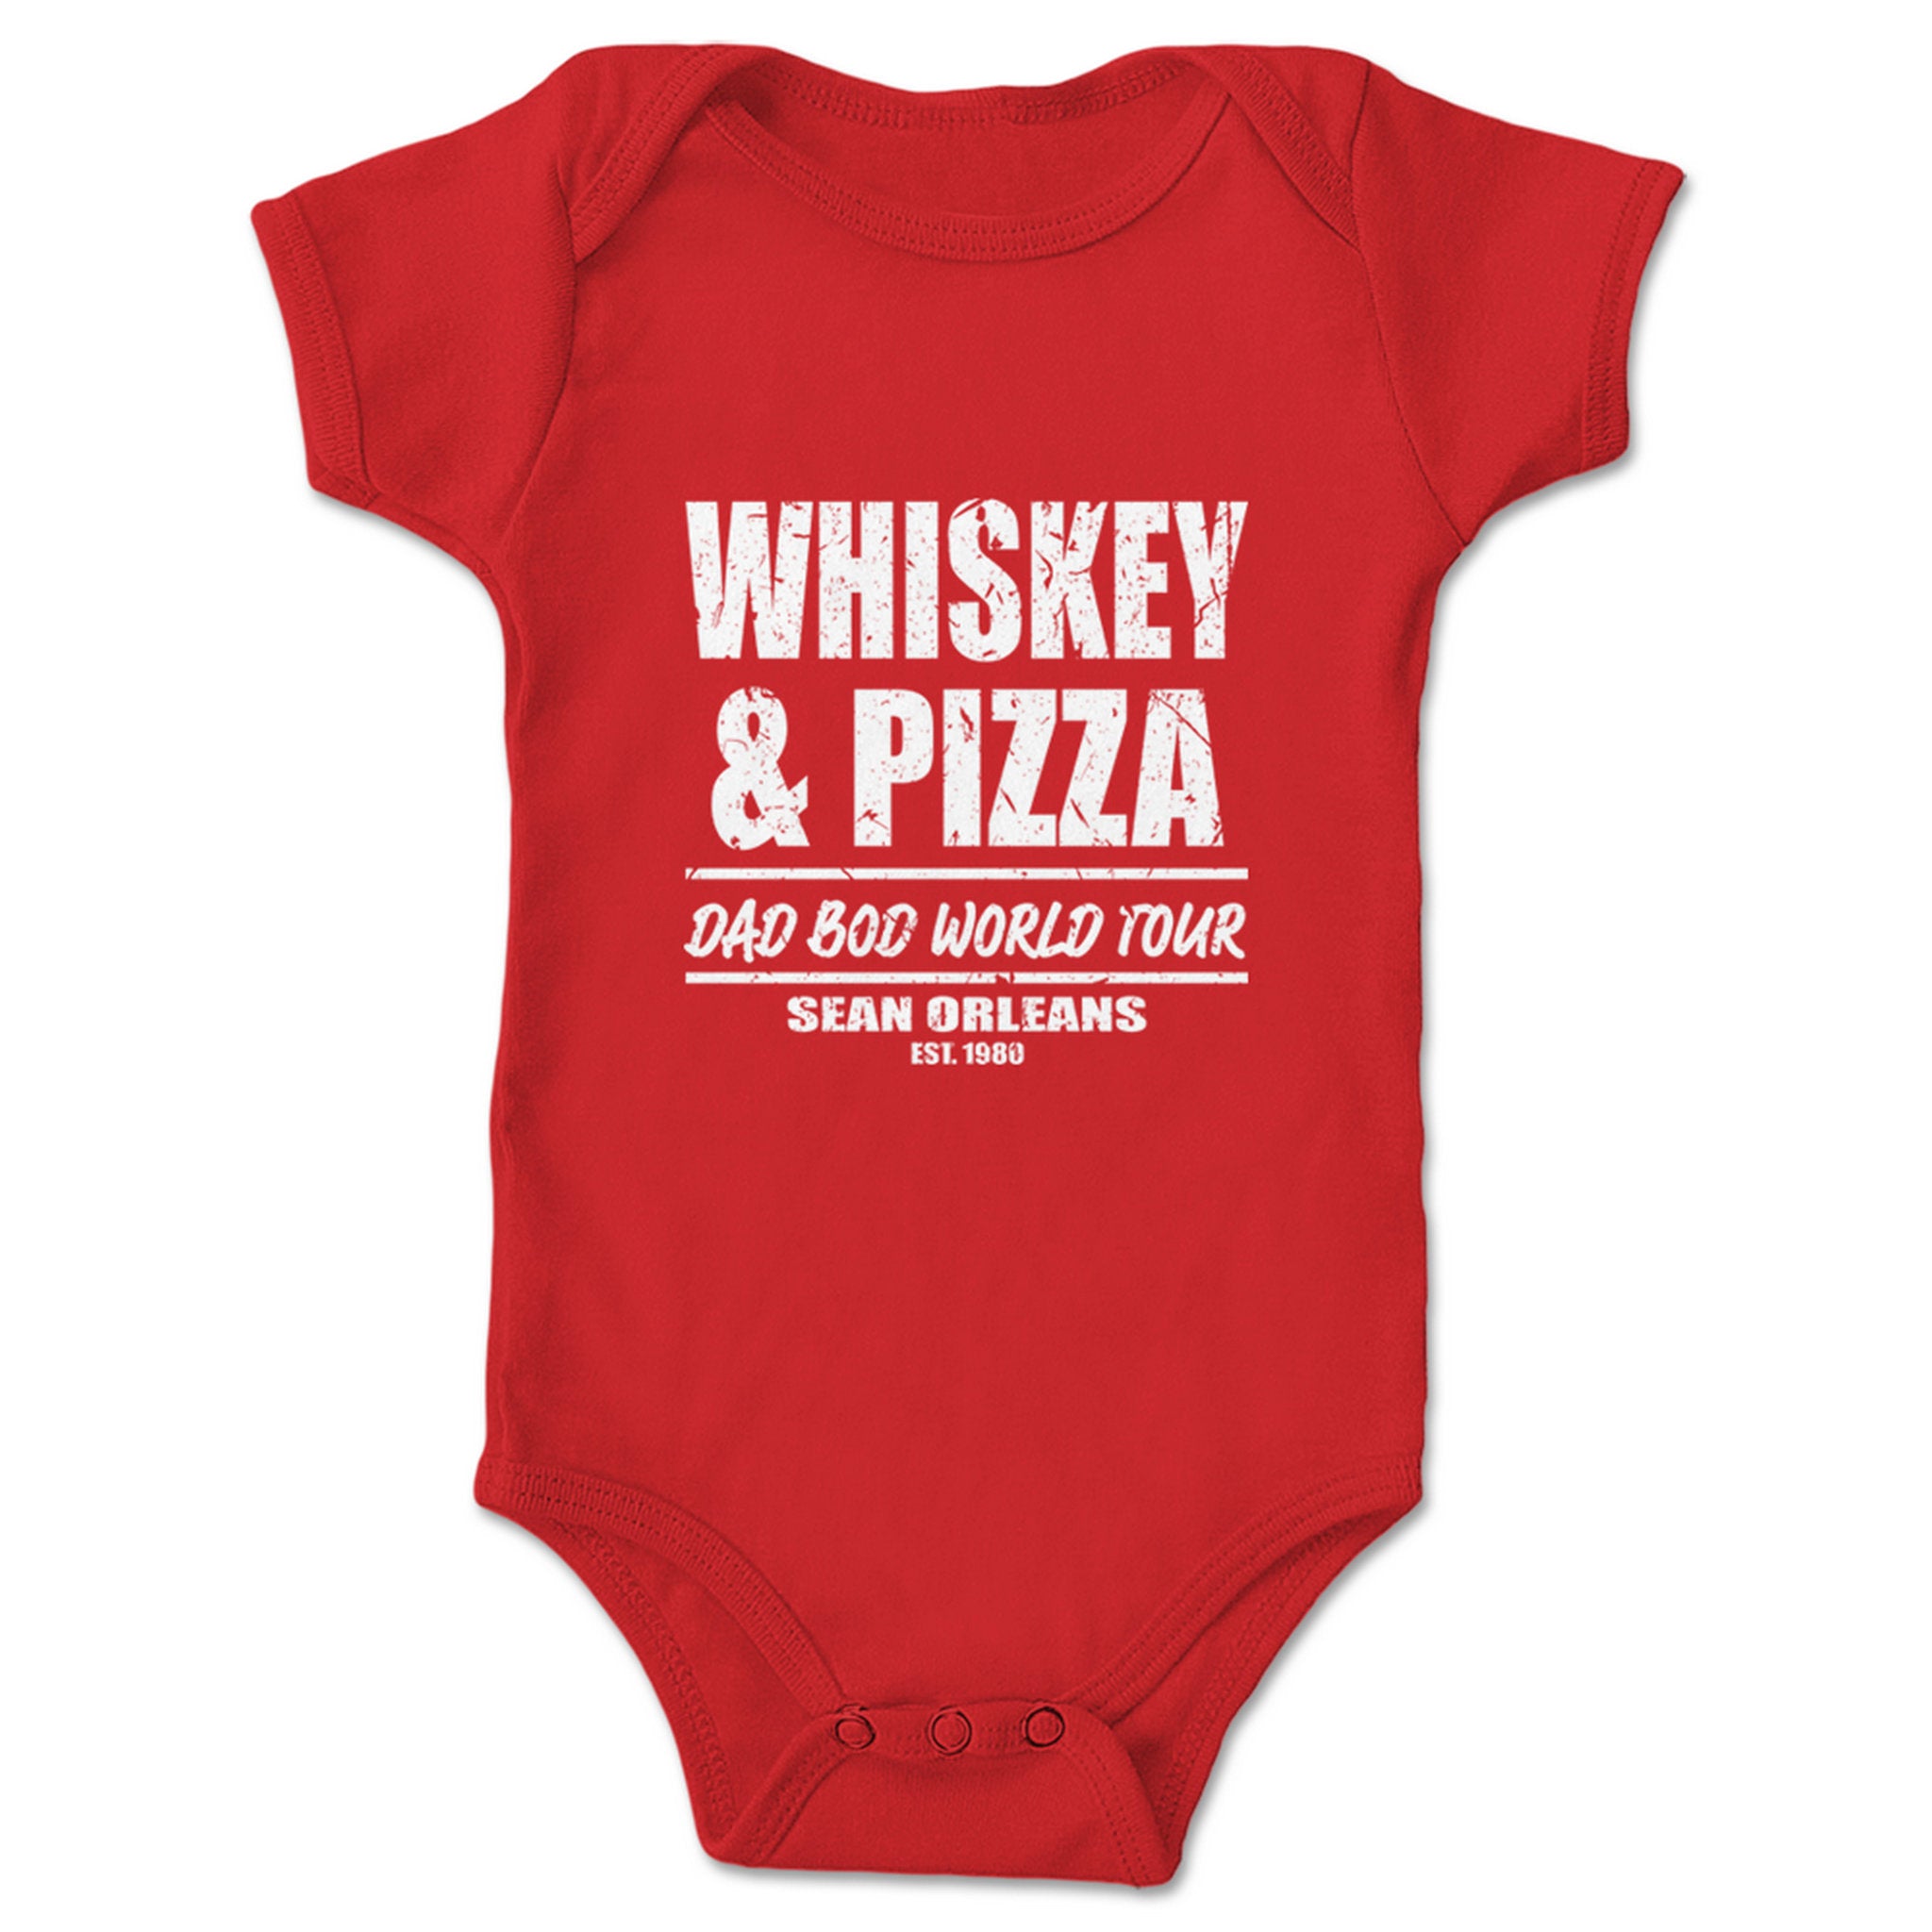 Sean Orleans - Whiskey & Pizza, Infant Onesie